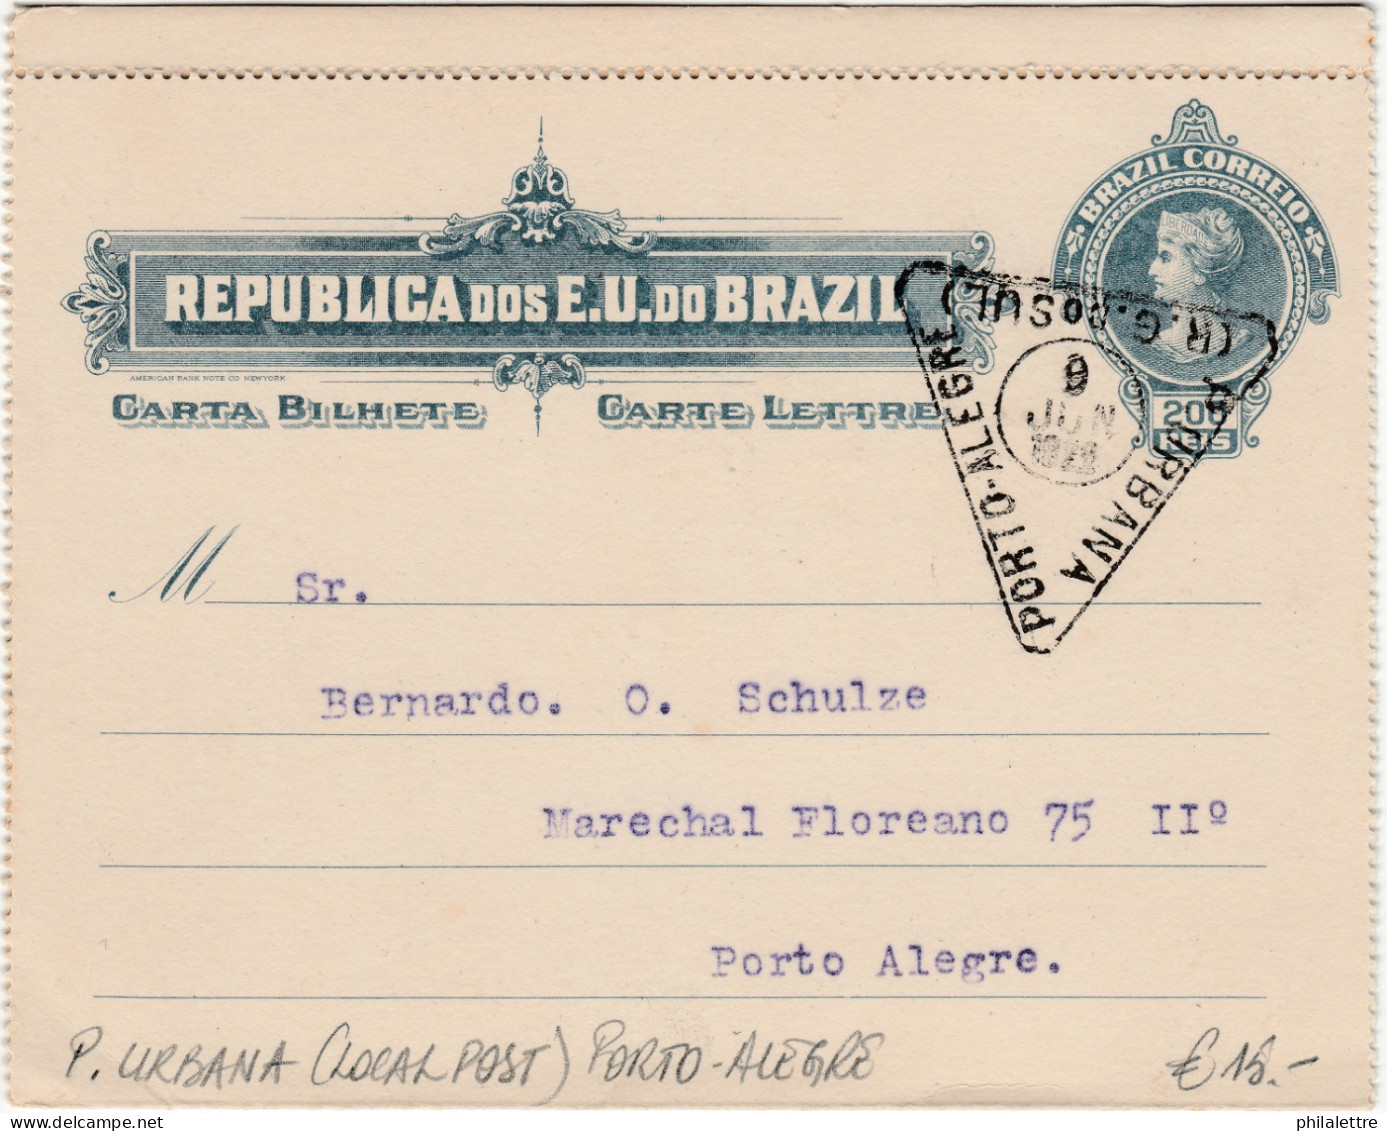 BRAZIL 1922 200 Reis Letter-Card Used In PORTO-ALEGRE Cancelled "P. URBANA" (City Post) - Storia Postale